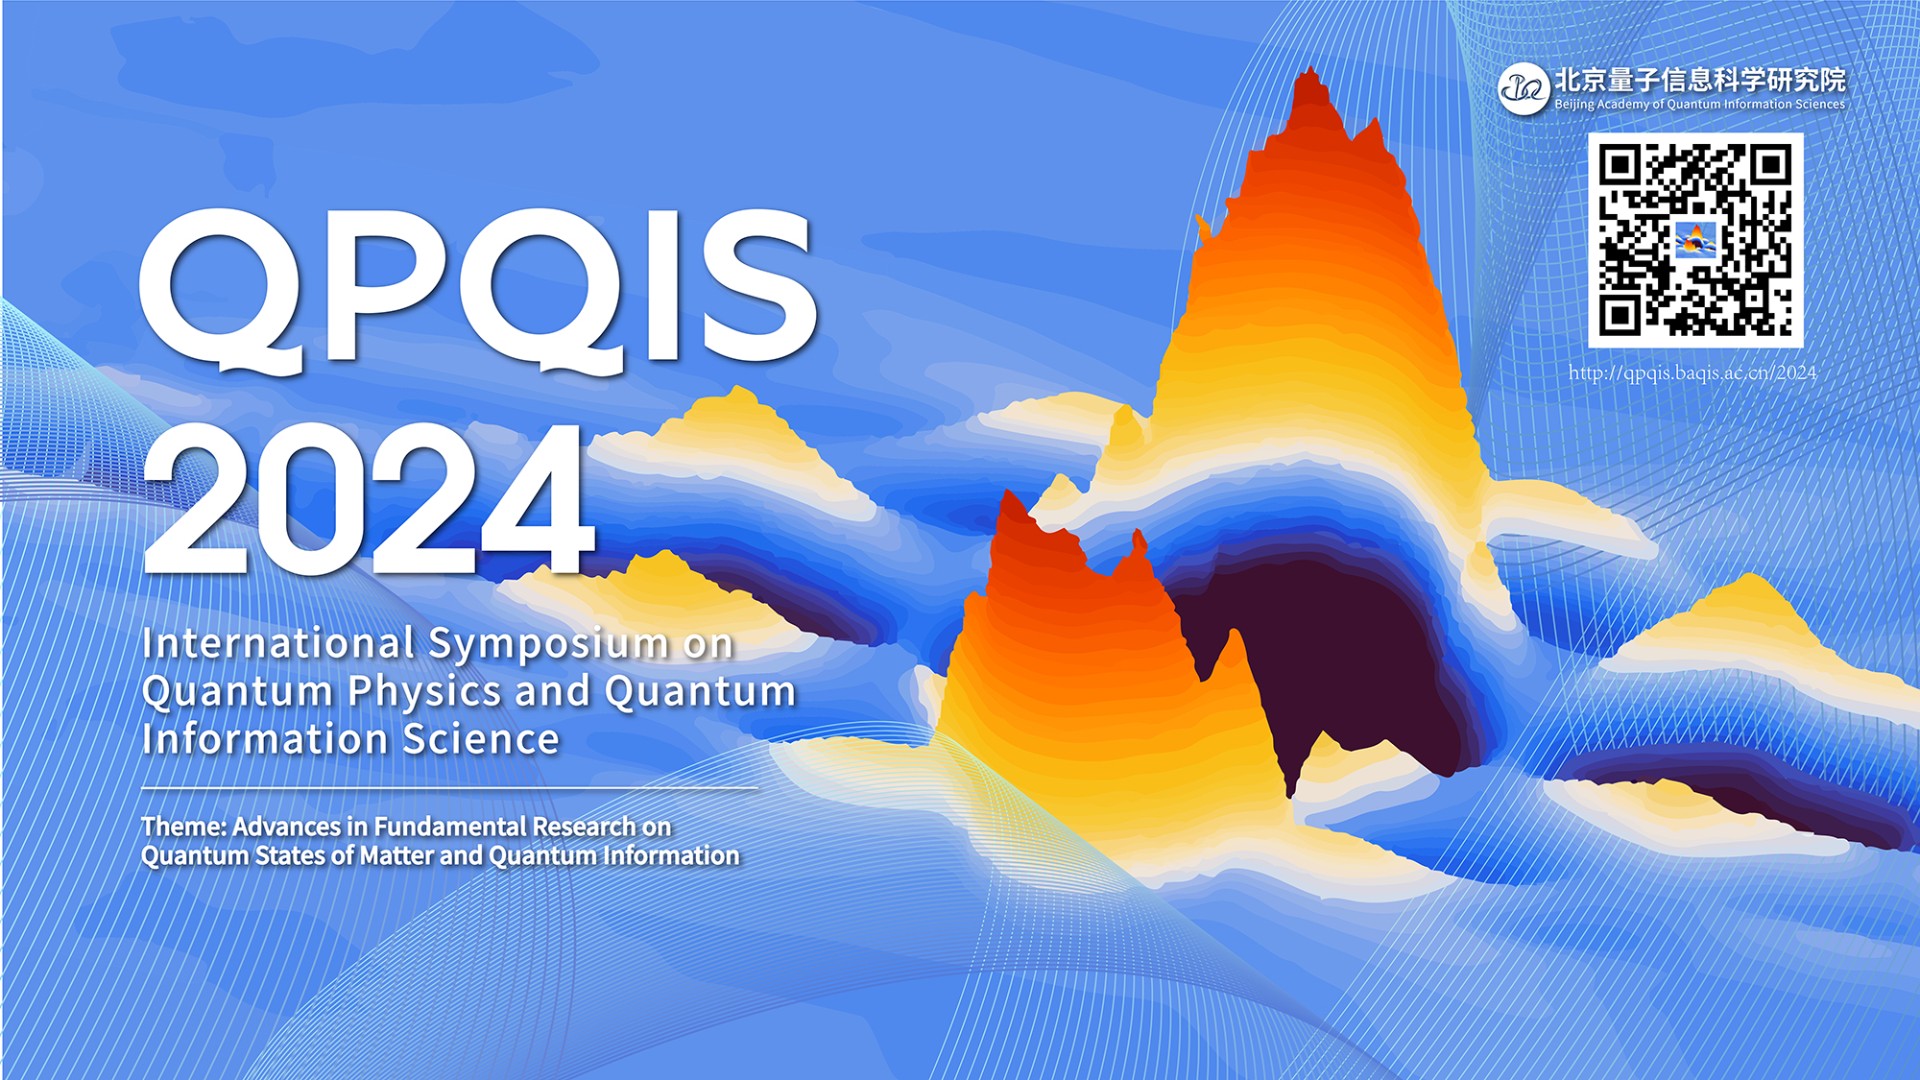 QPQIS-2024国际会议注册已开放并征集摘要